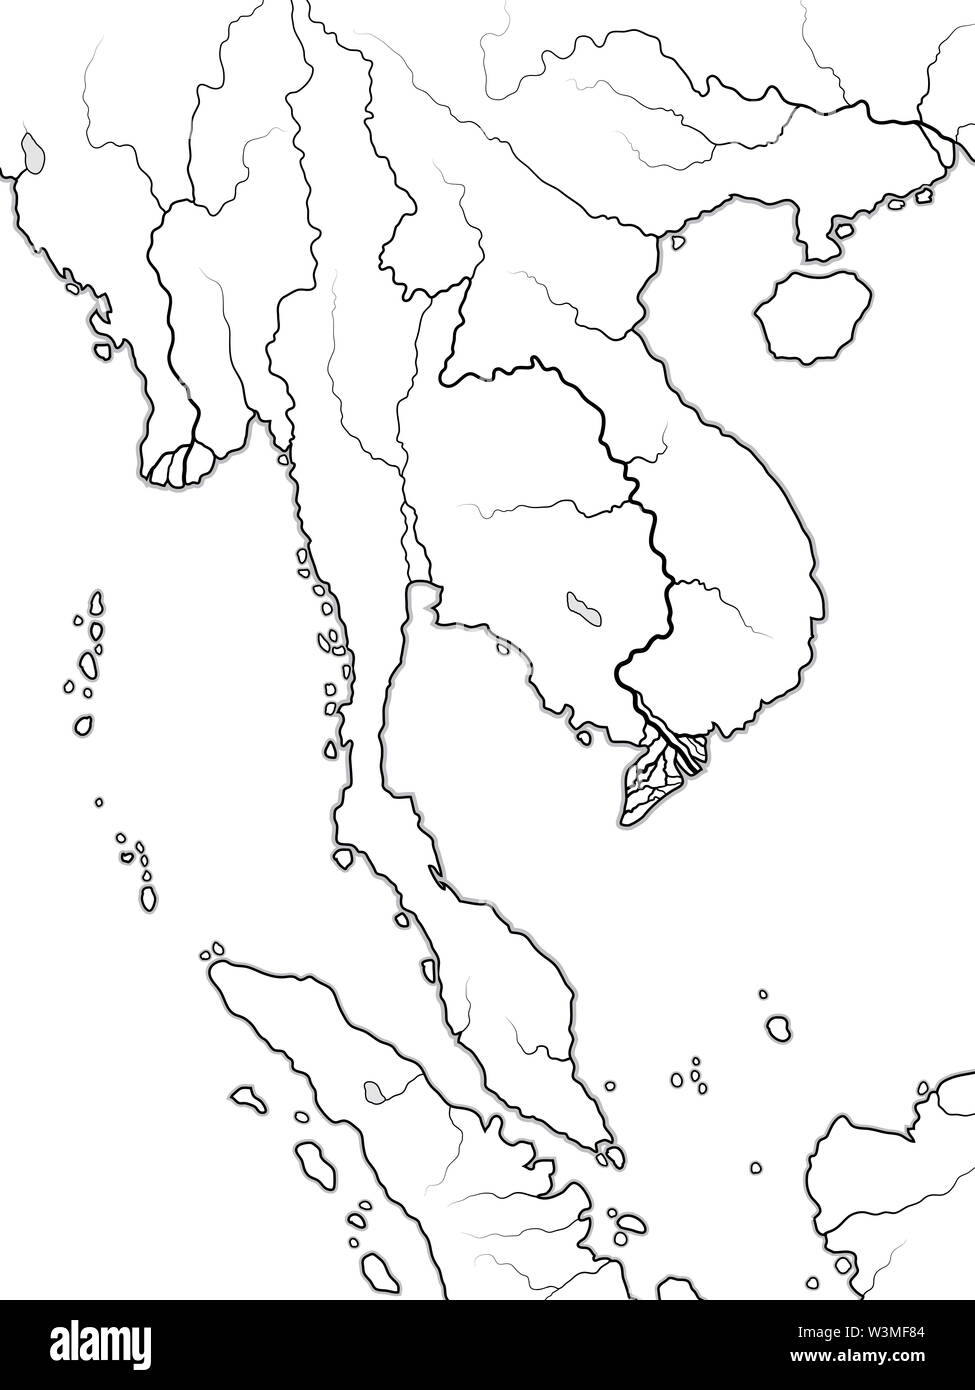 Weltkarte der Indochina: Südasien, Indochinesische Halbinsel, Thailand, Siam, Vietnam, Laos, Kambodscha, Singapur, Malaysia, Malacca, Burma, Myanmar. Stockfoto